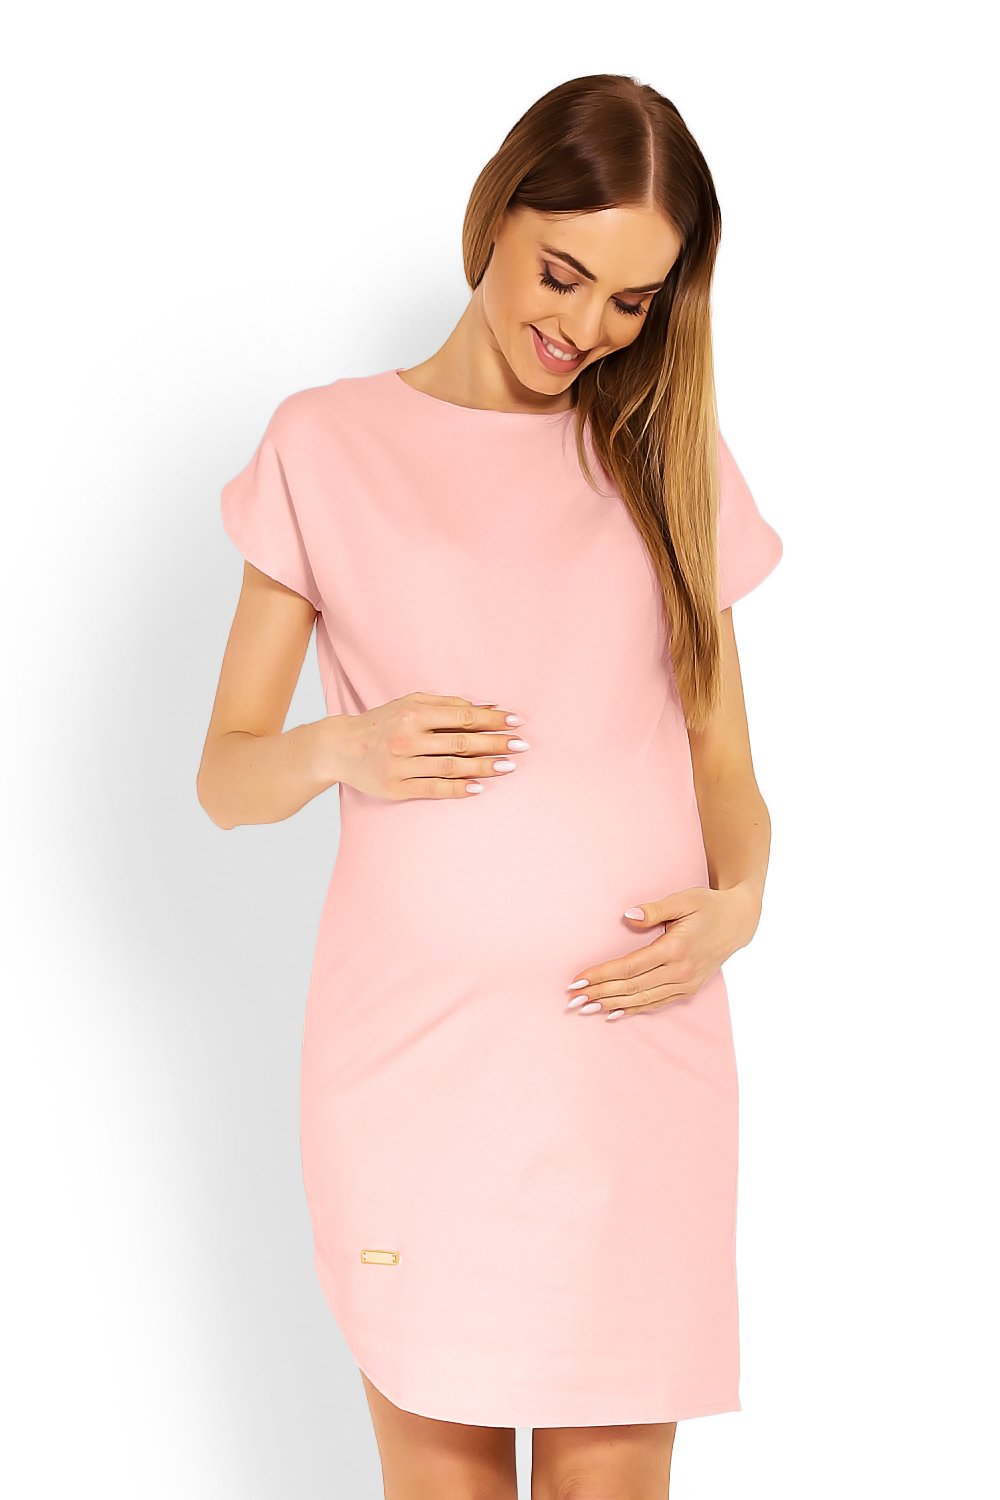 Pregnancy dress model 114493 P..